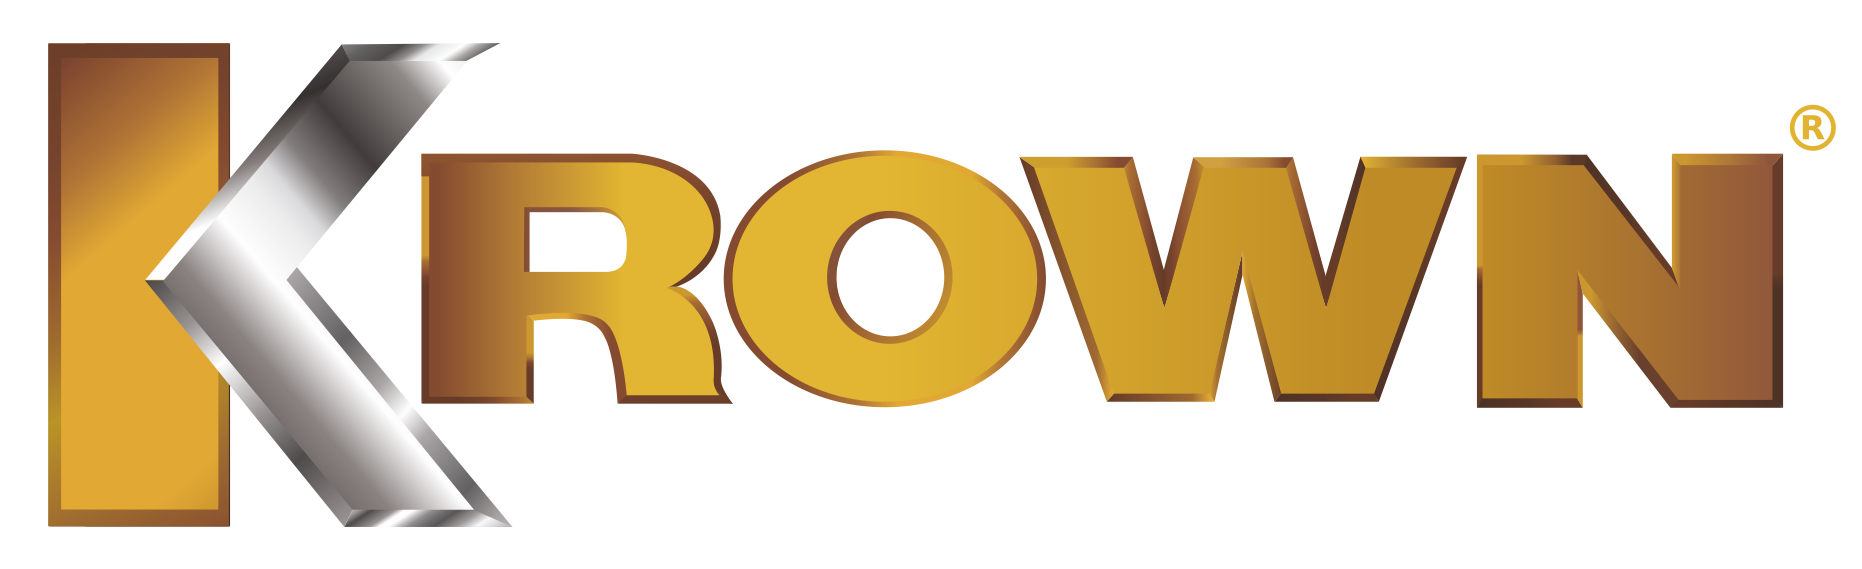 Официальный сайт бренда KROWN  в СНГ